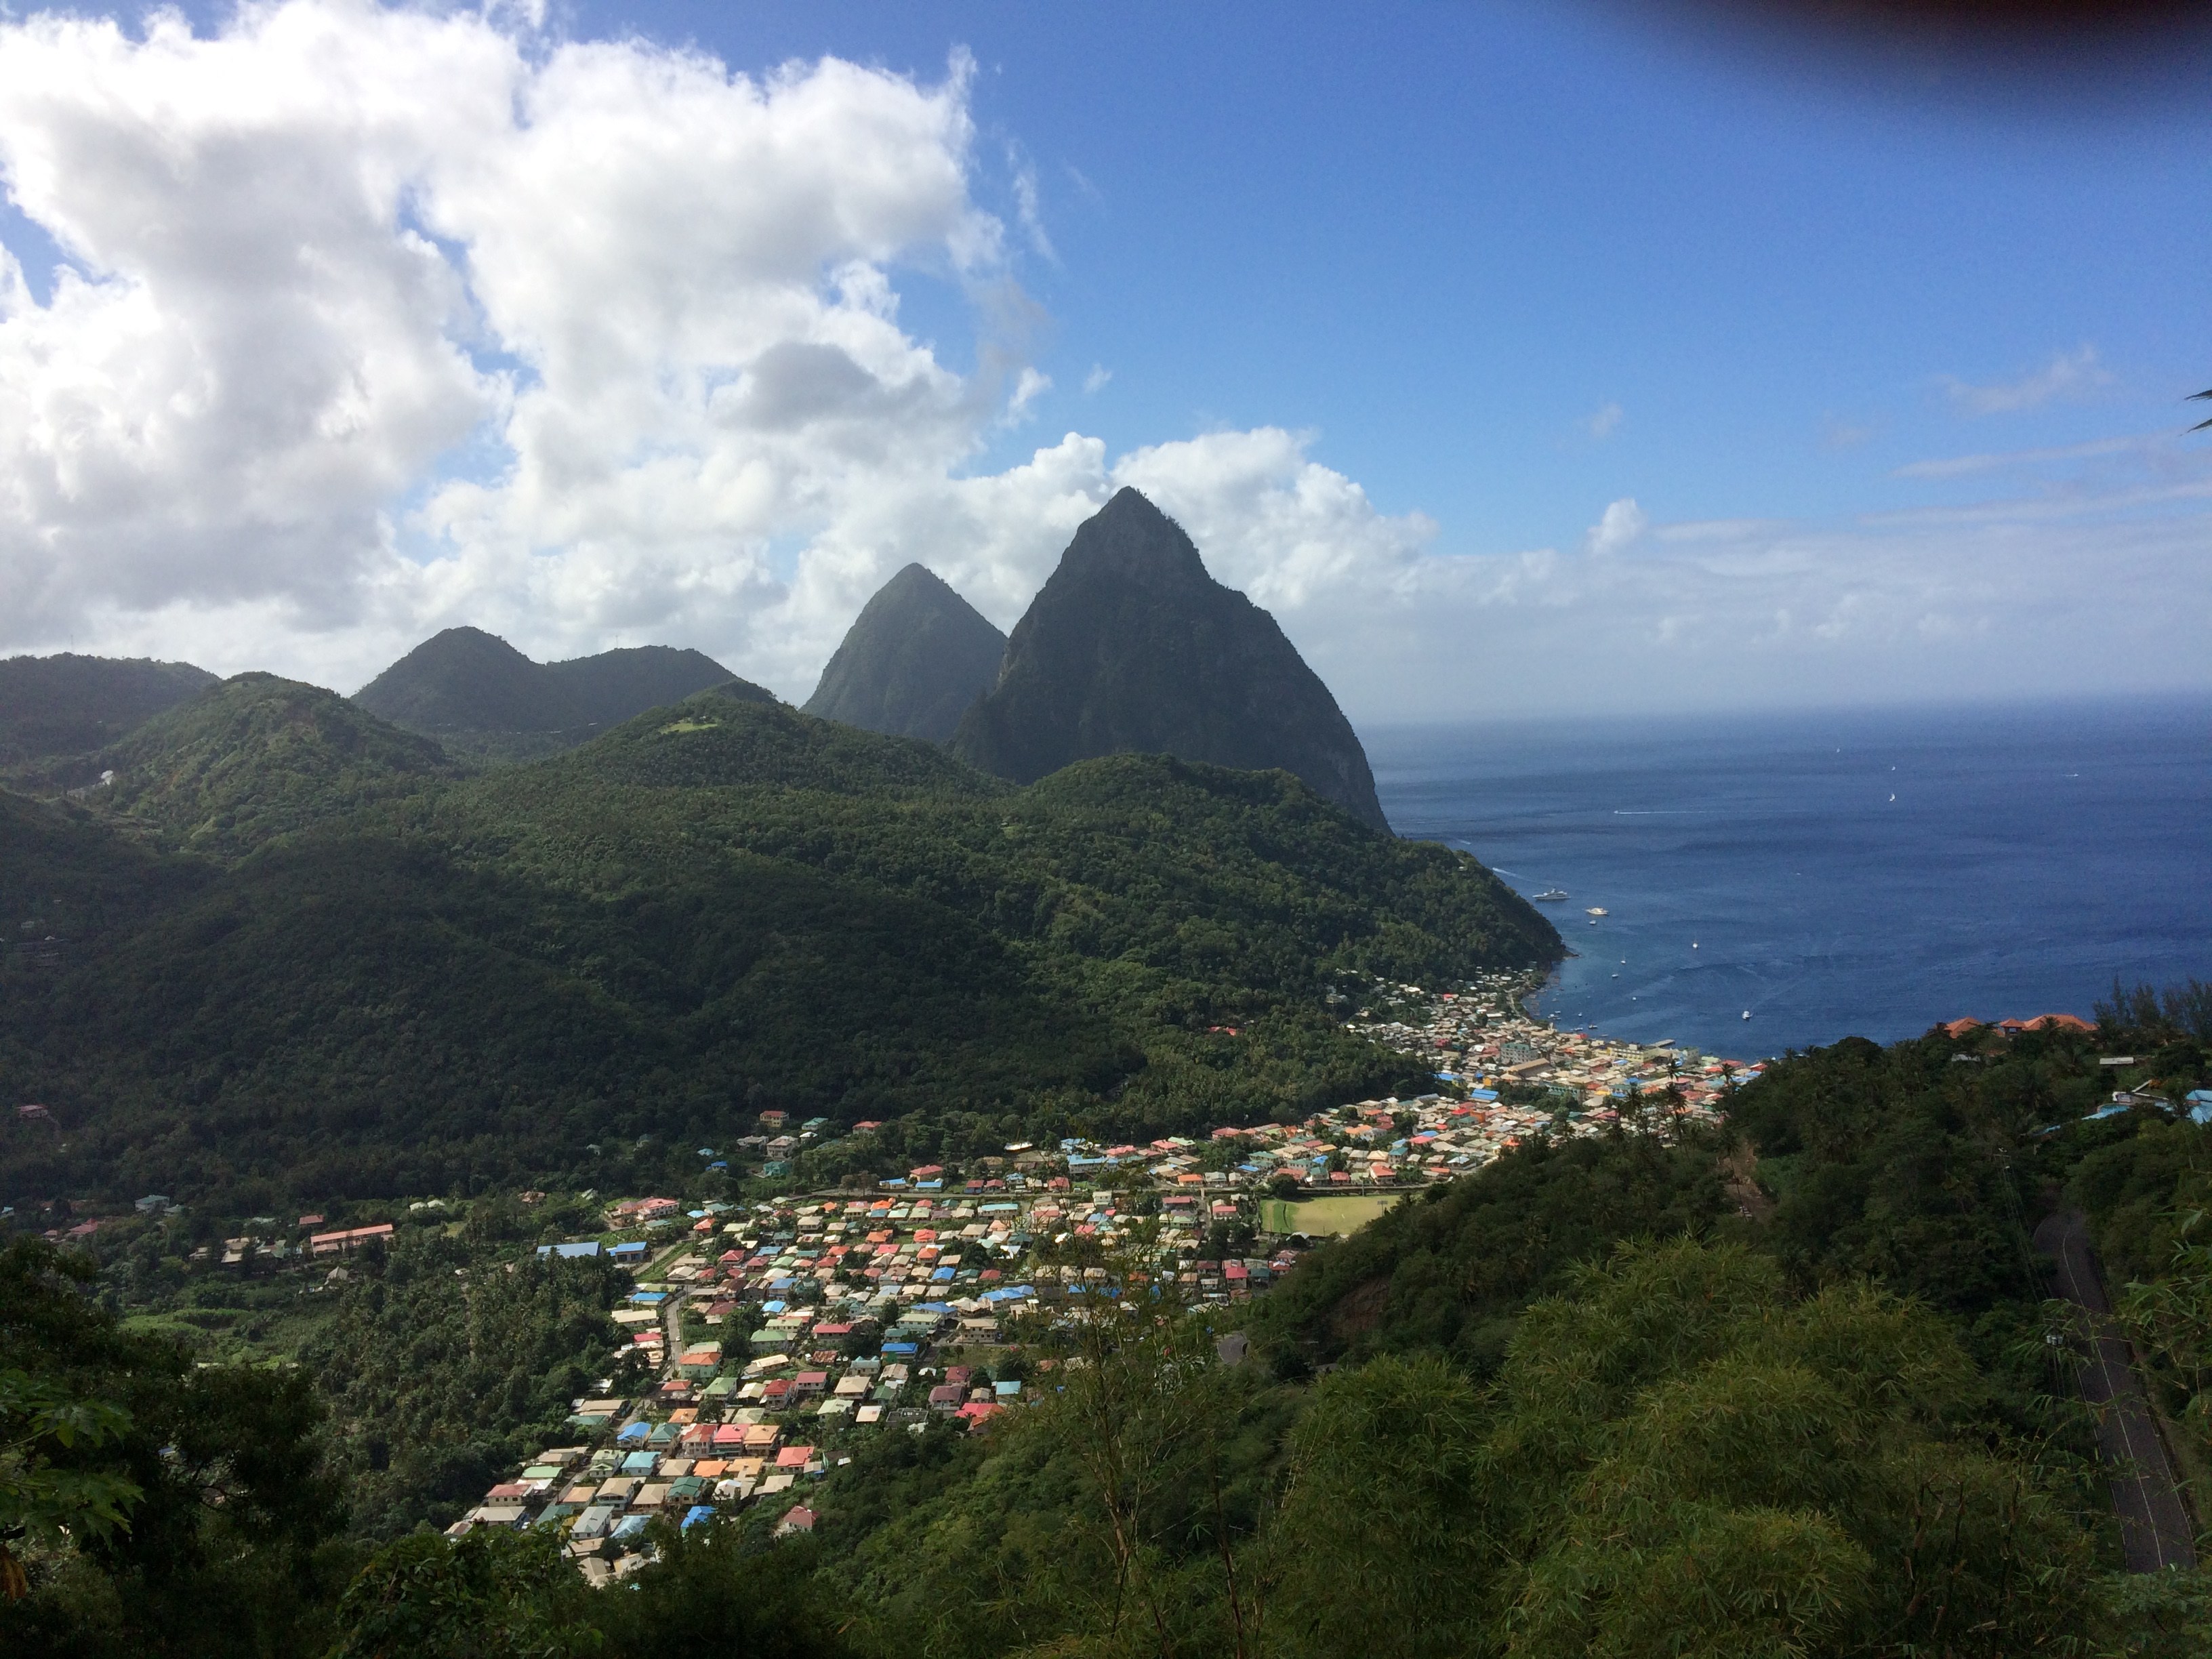 Hike St. Lucia > The Mountain Hiker